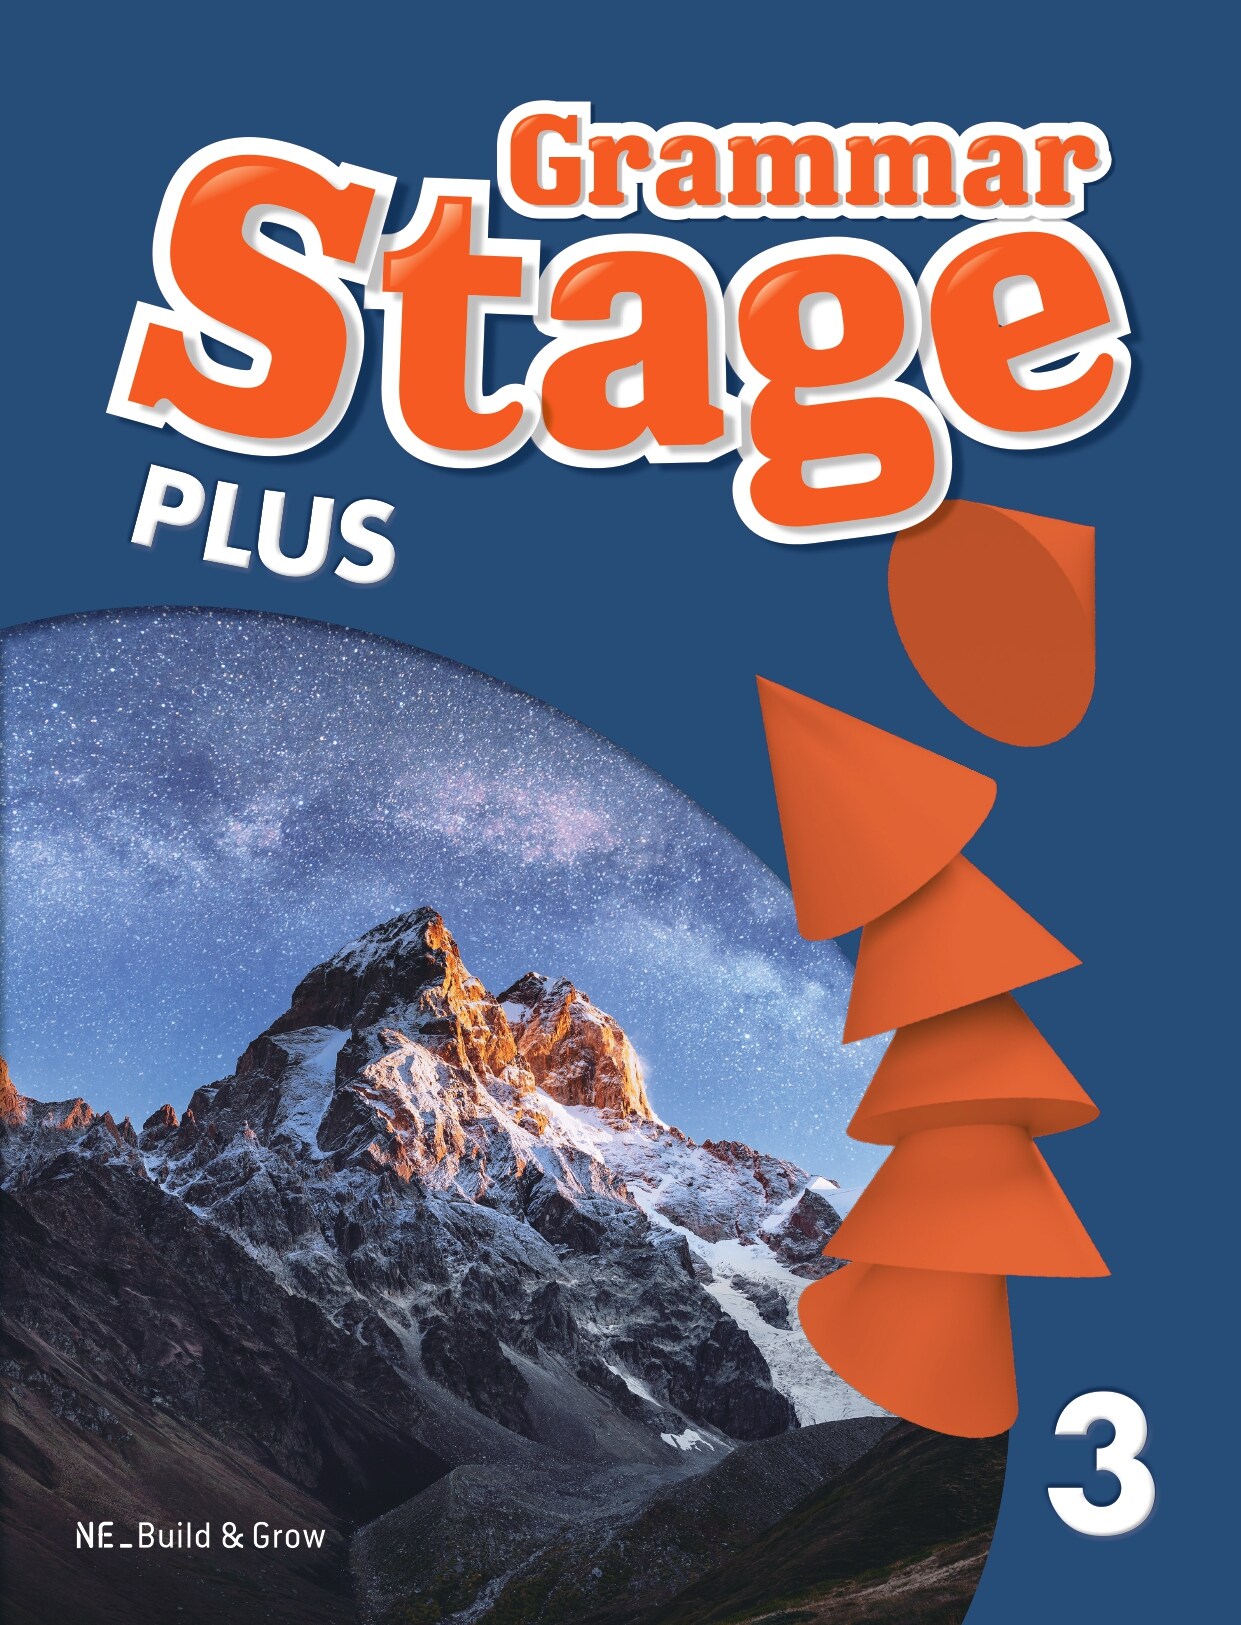 Grammar Stage Plus 3 (Paperback)